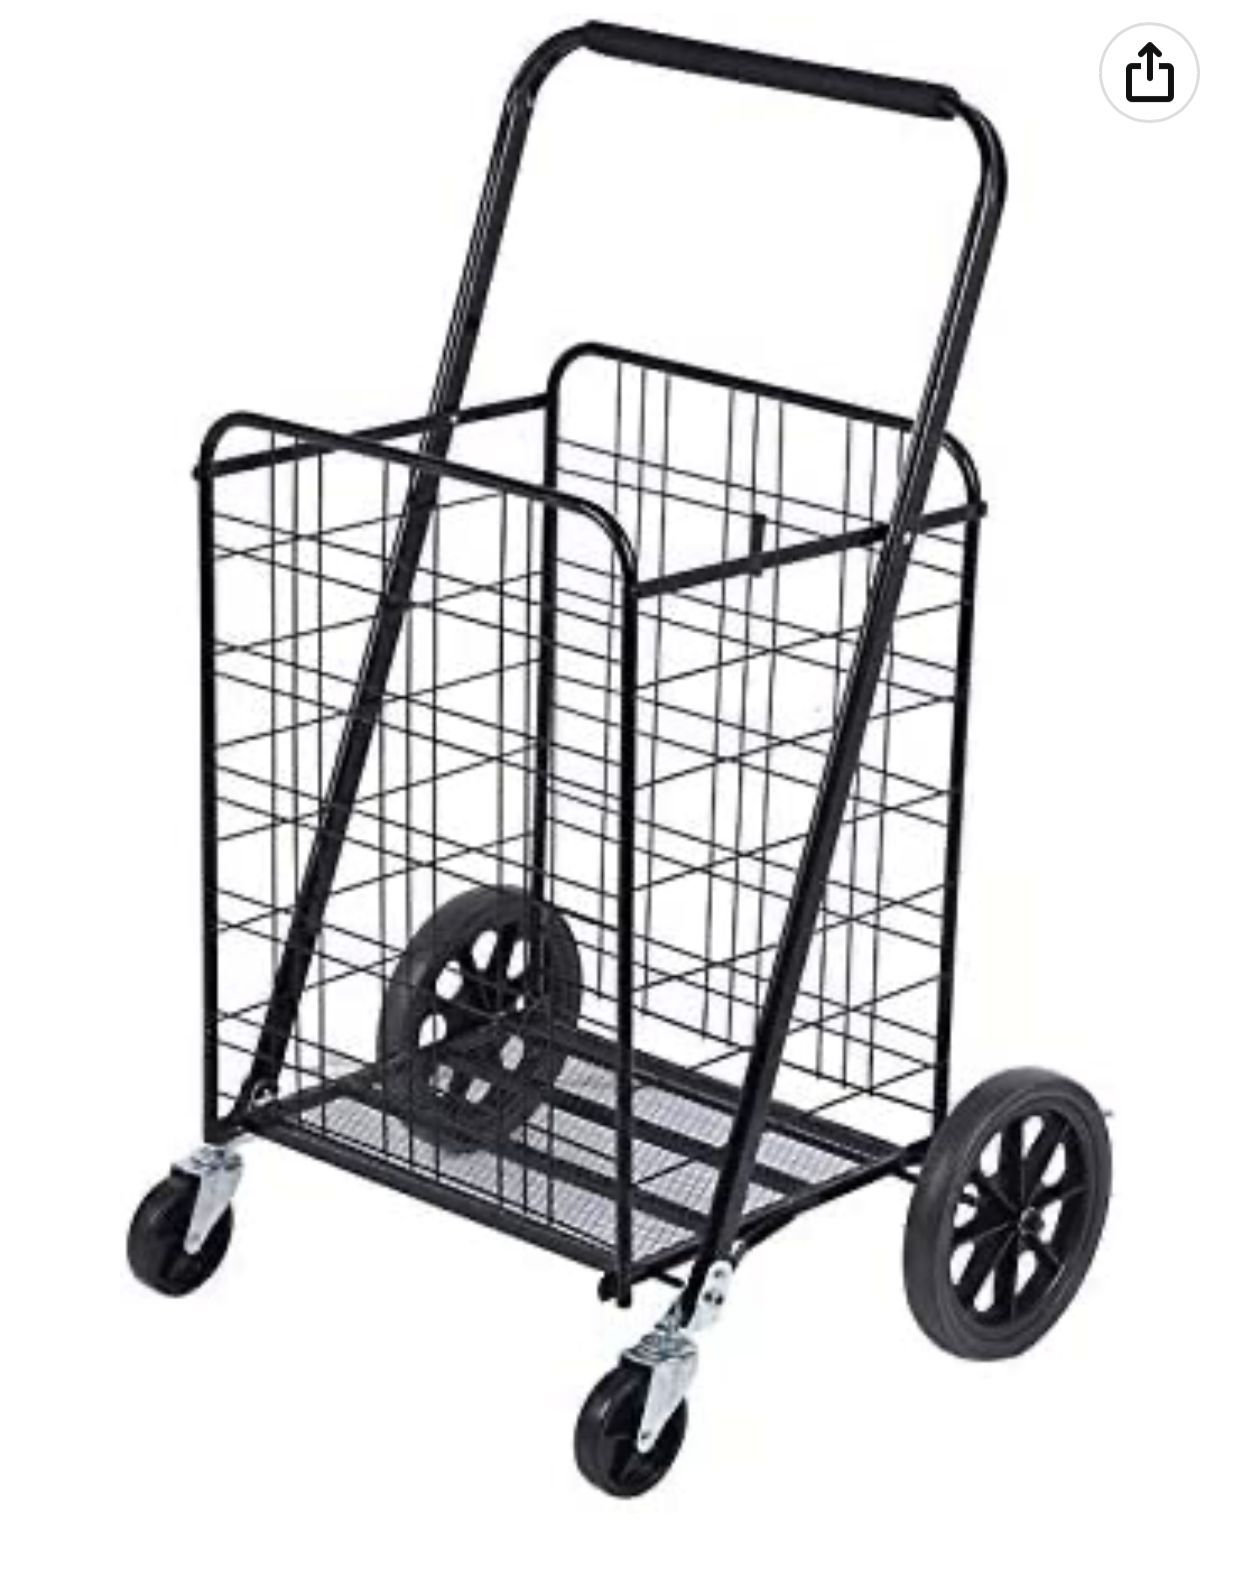 Portable Shopping Trolley on Wheels